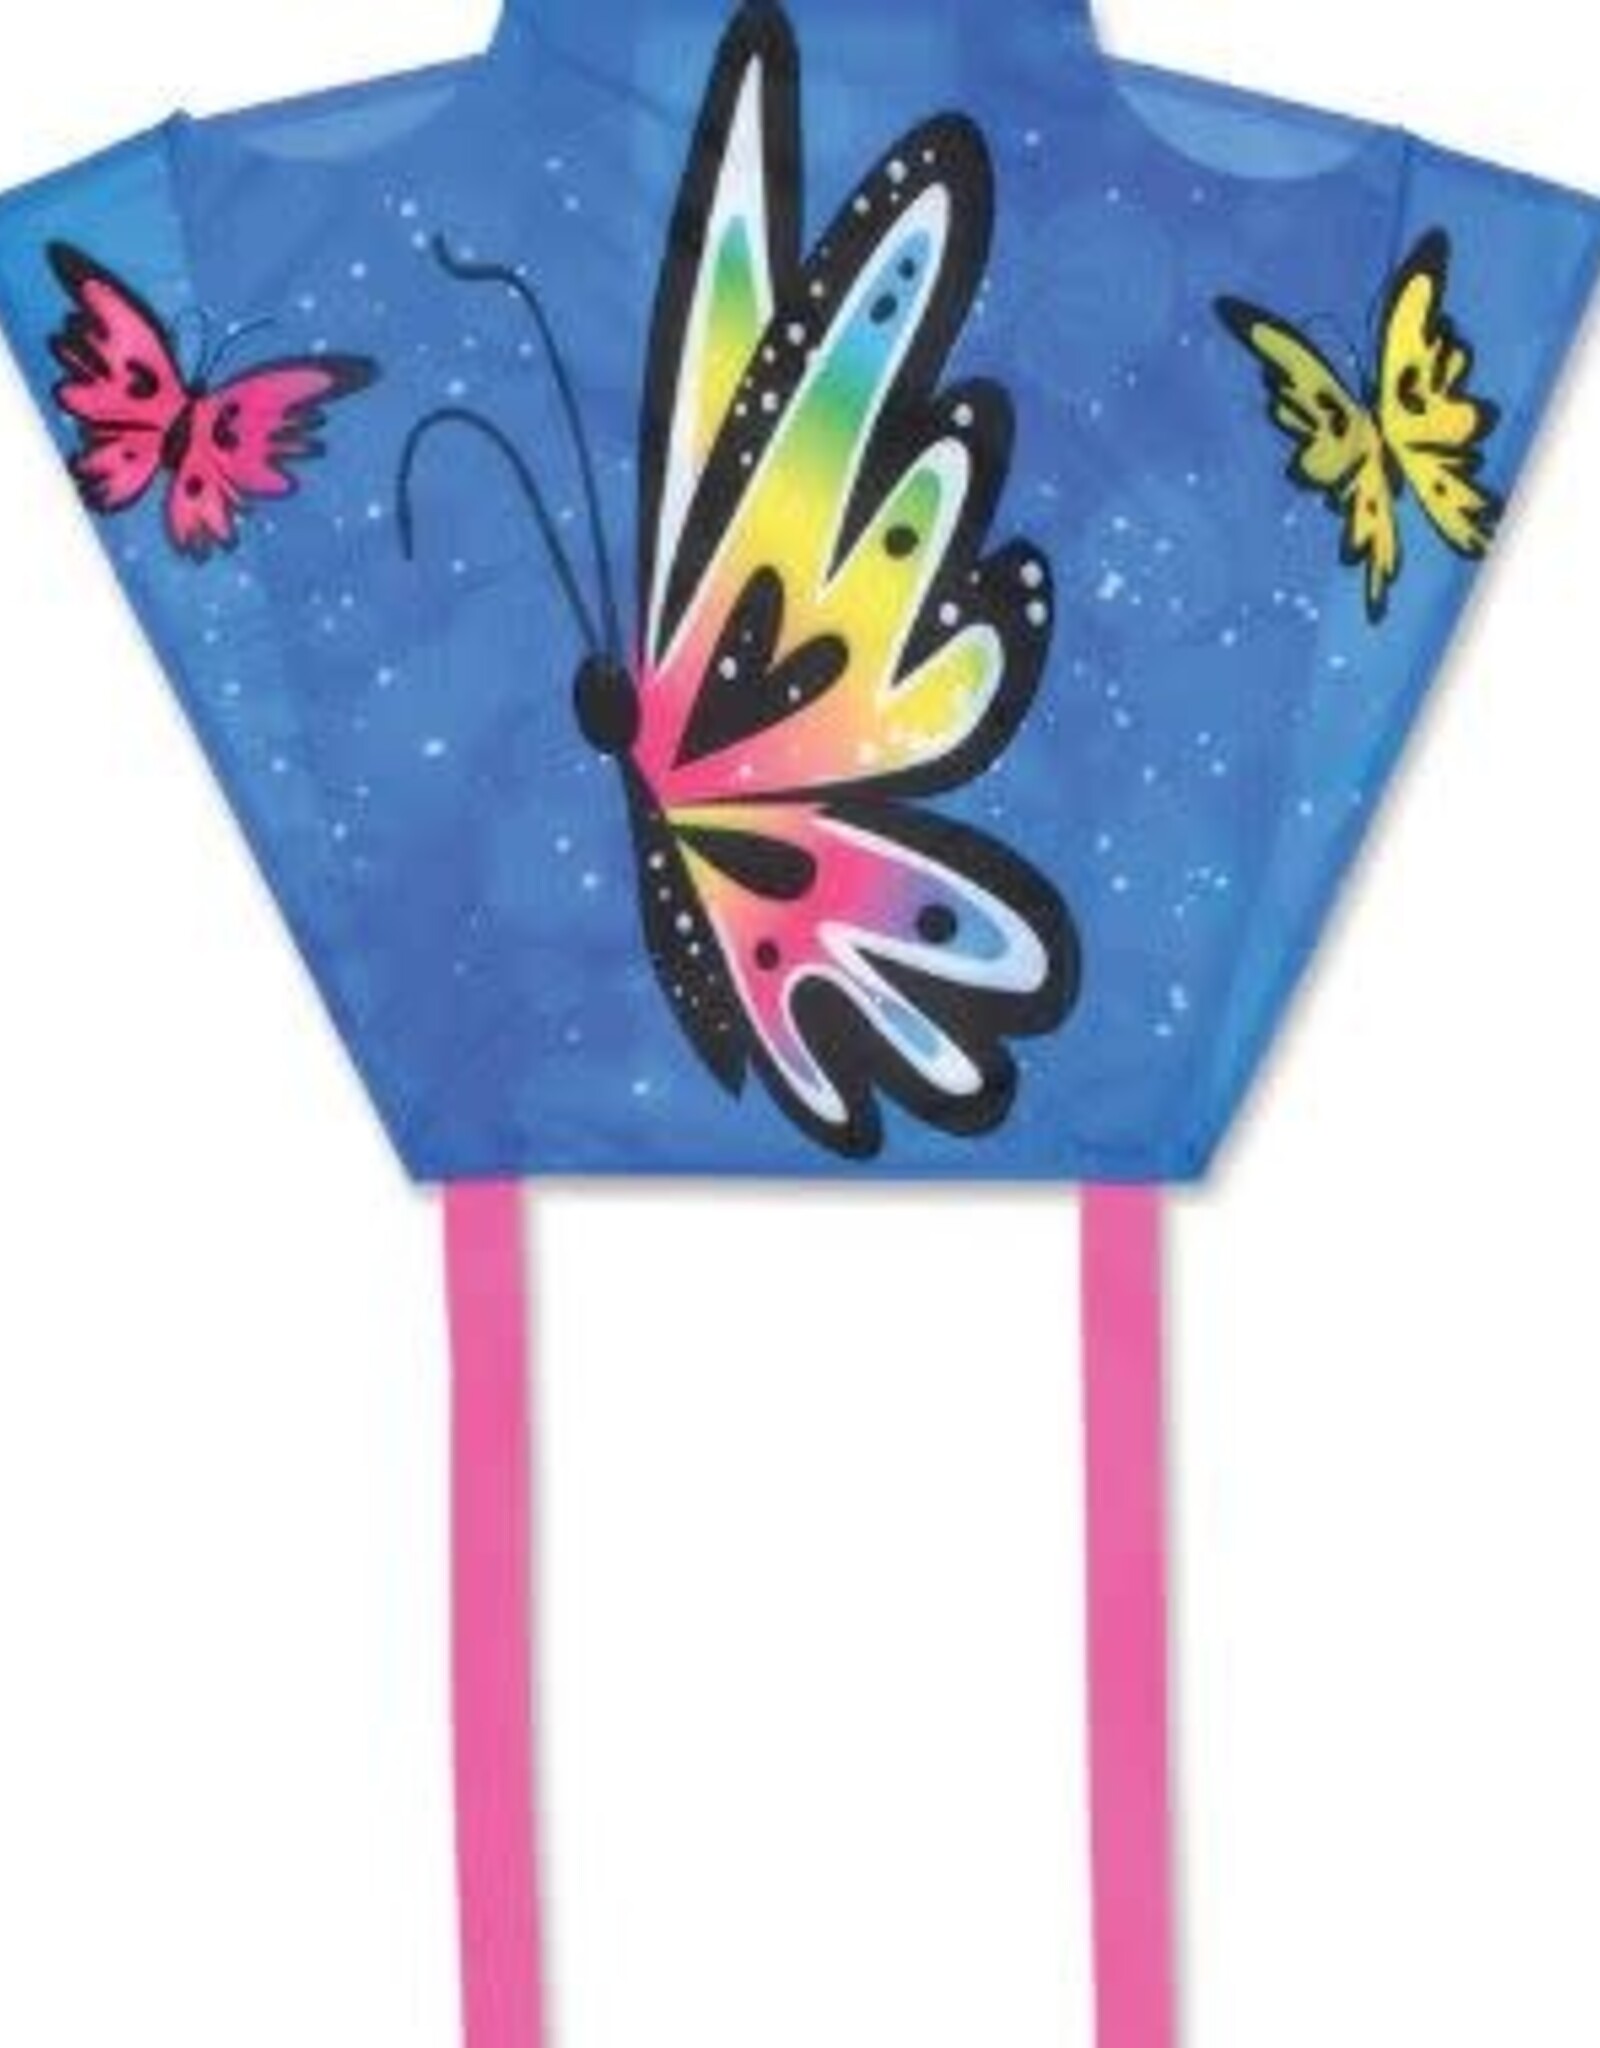 Premier Kites MINI BACK PACK - Butterflies